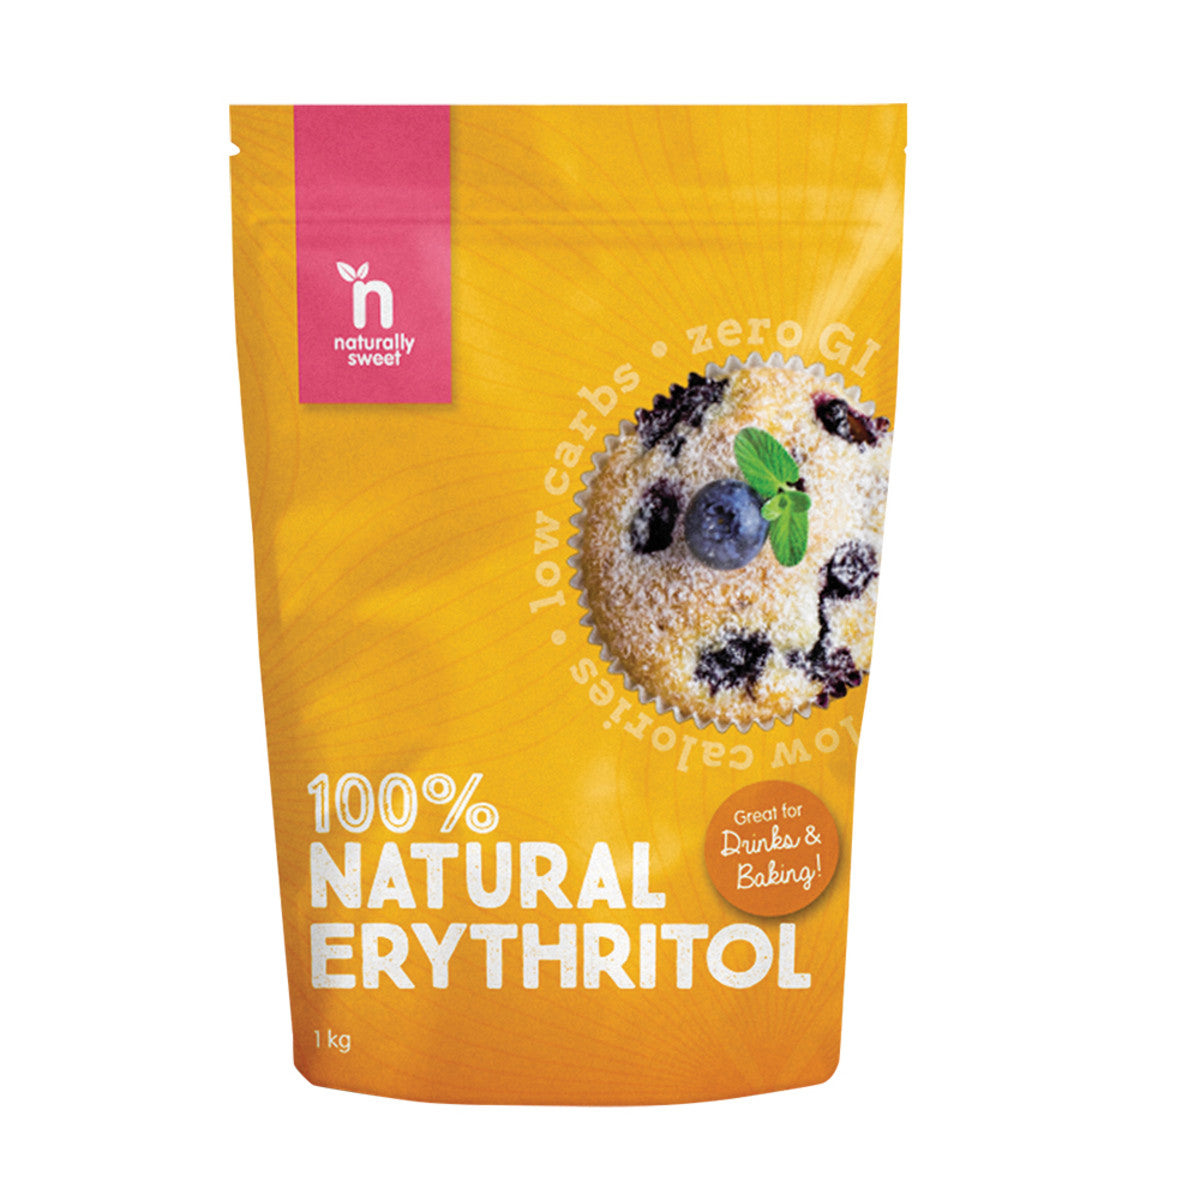 Naturally Sweet - 100% Natural Erythritol